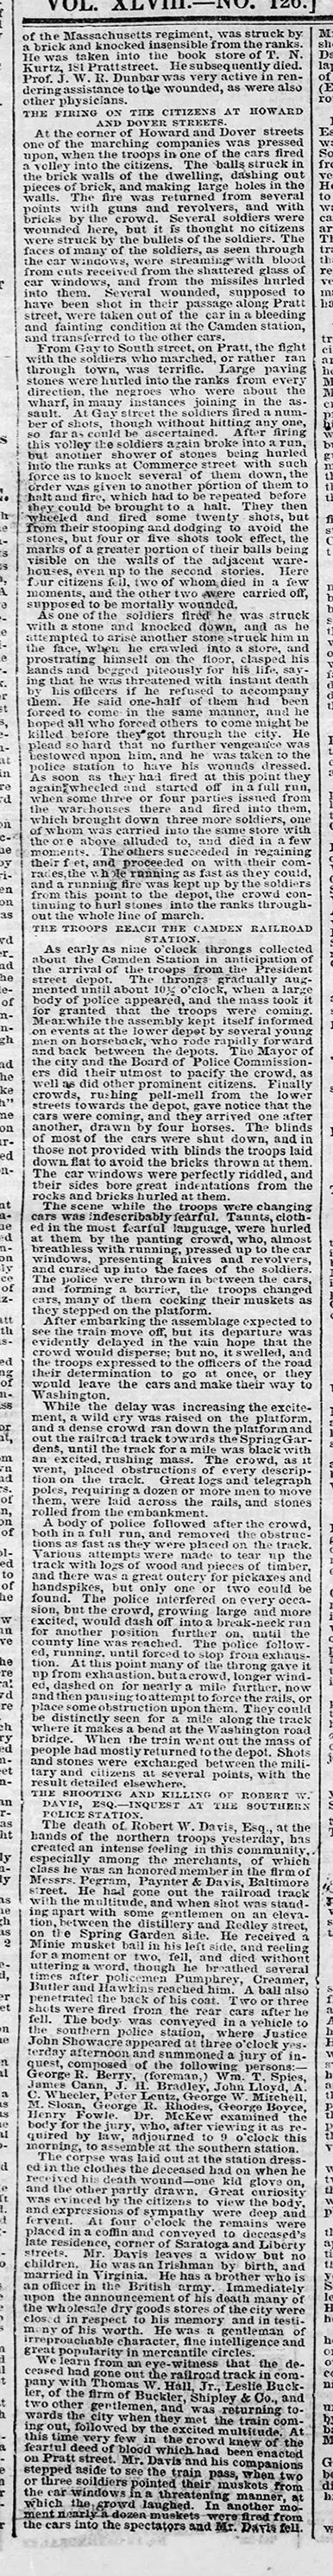 The Baltimore Sun Sat Apr 20 1861